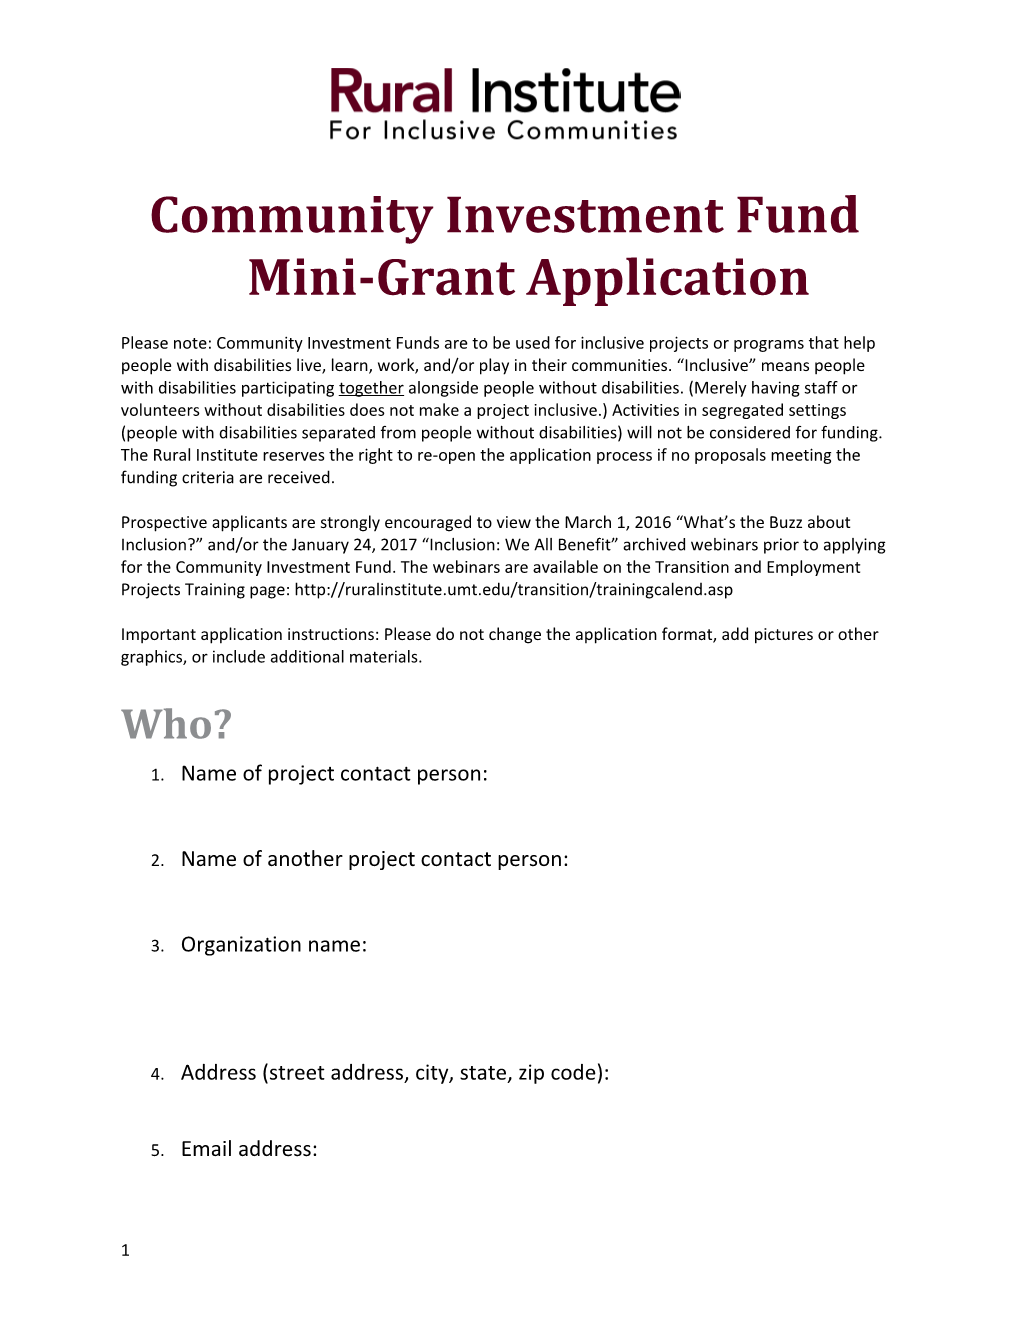 Community Investment Fund Mini-Grant Application